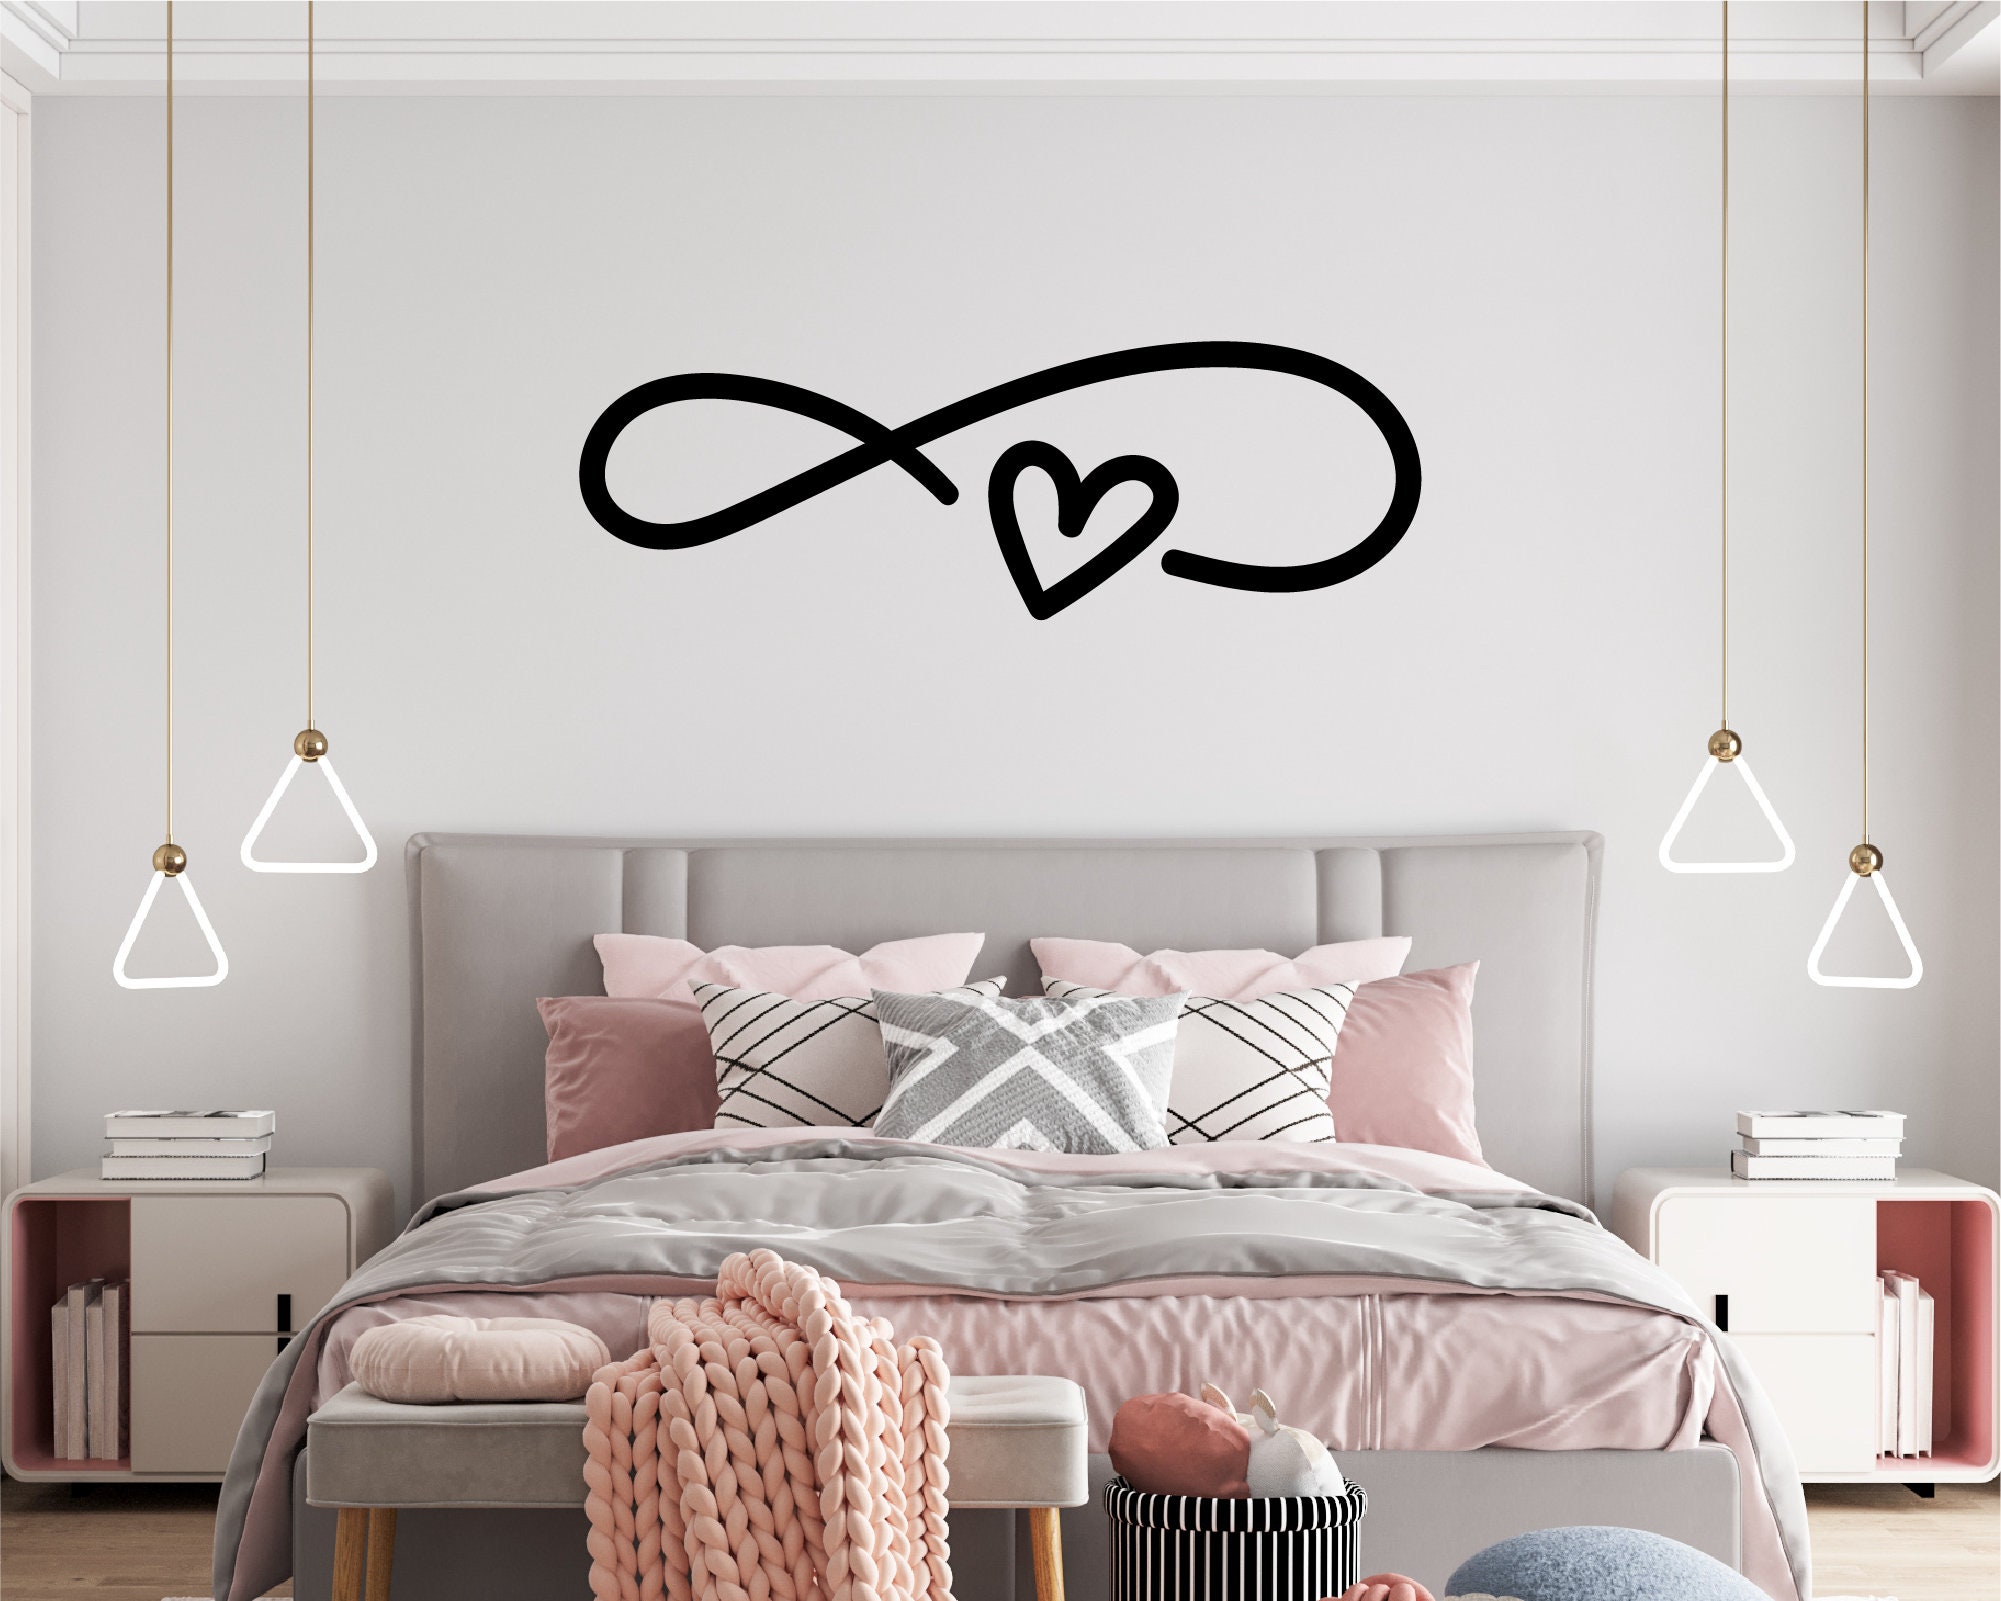 India in Infinity - Infinity Wall Decal, Romantic Infinity Sticker, Love Art, Infinity Love Decal Online Wall Etsy Symbol Wall Decal, Buy Wedding Wall Bedroom Heart